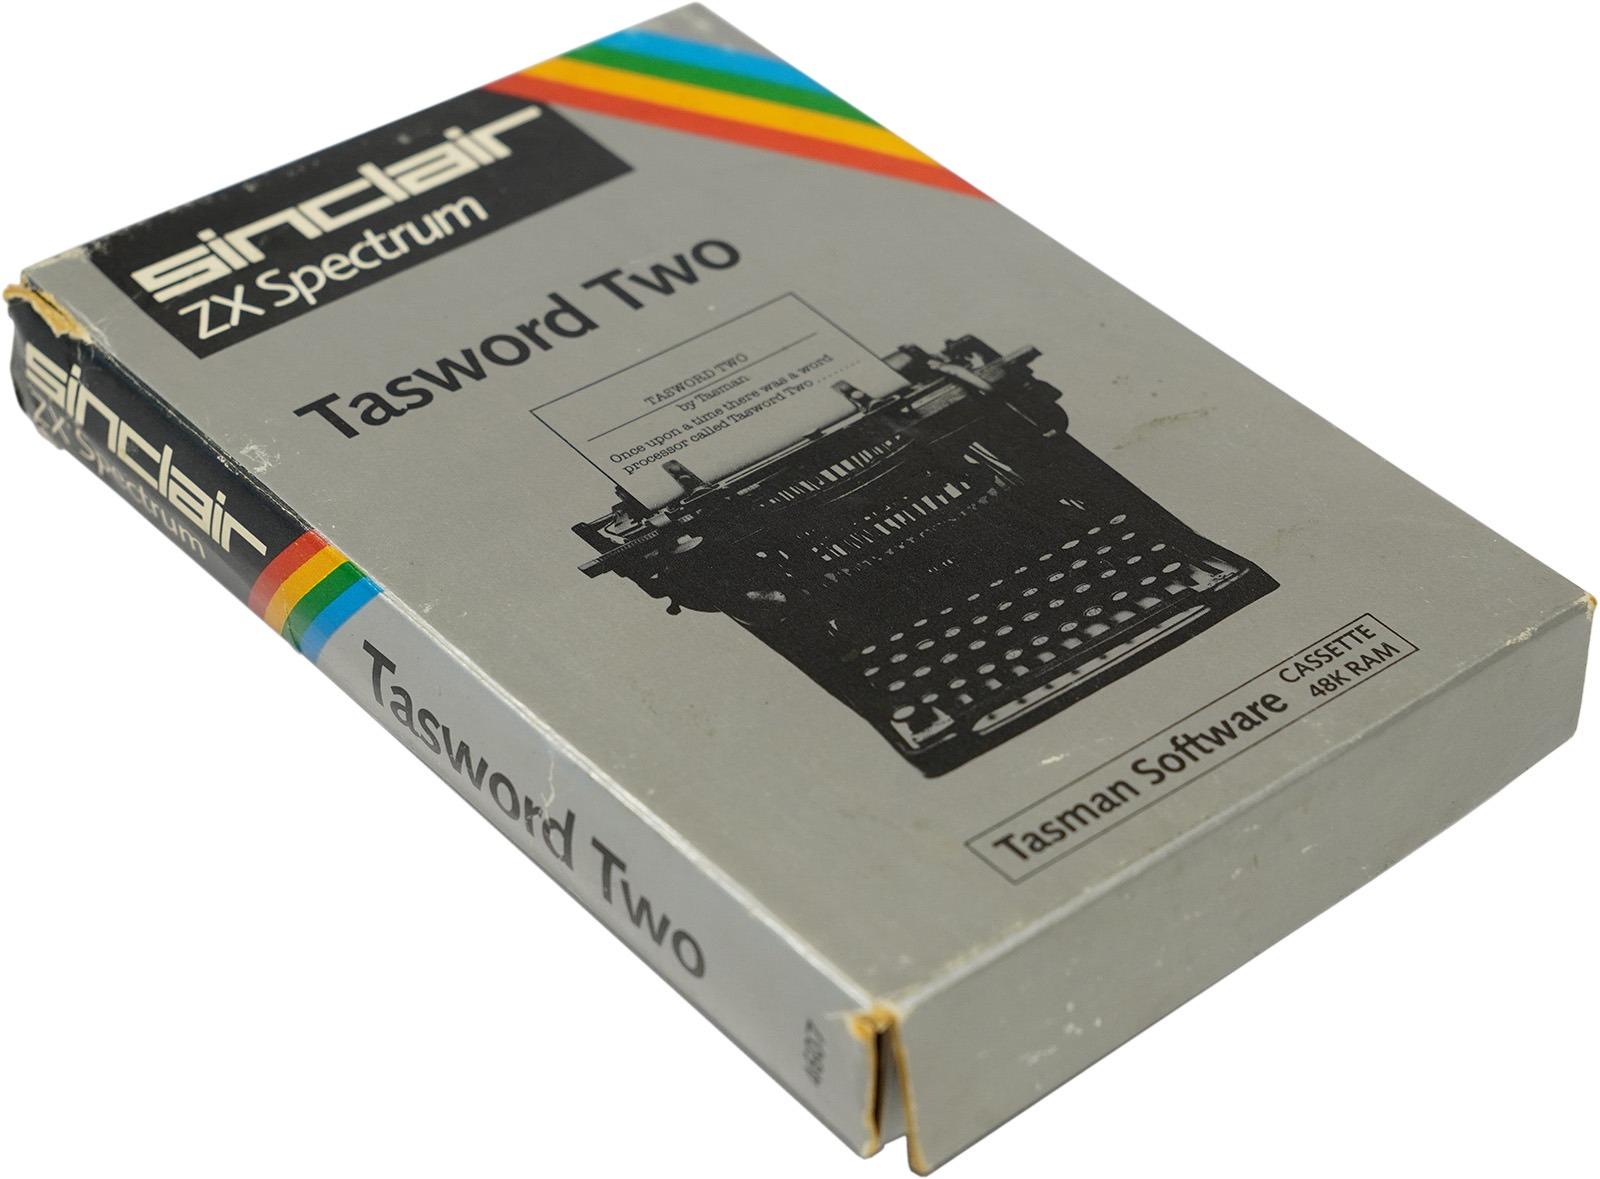 kazeta s textovým editorem Tasword Two pro ZX Spectrum - Počítače a hry